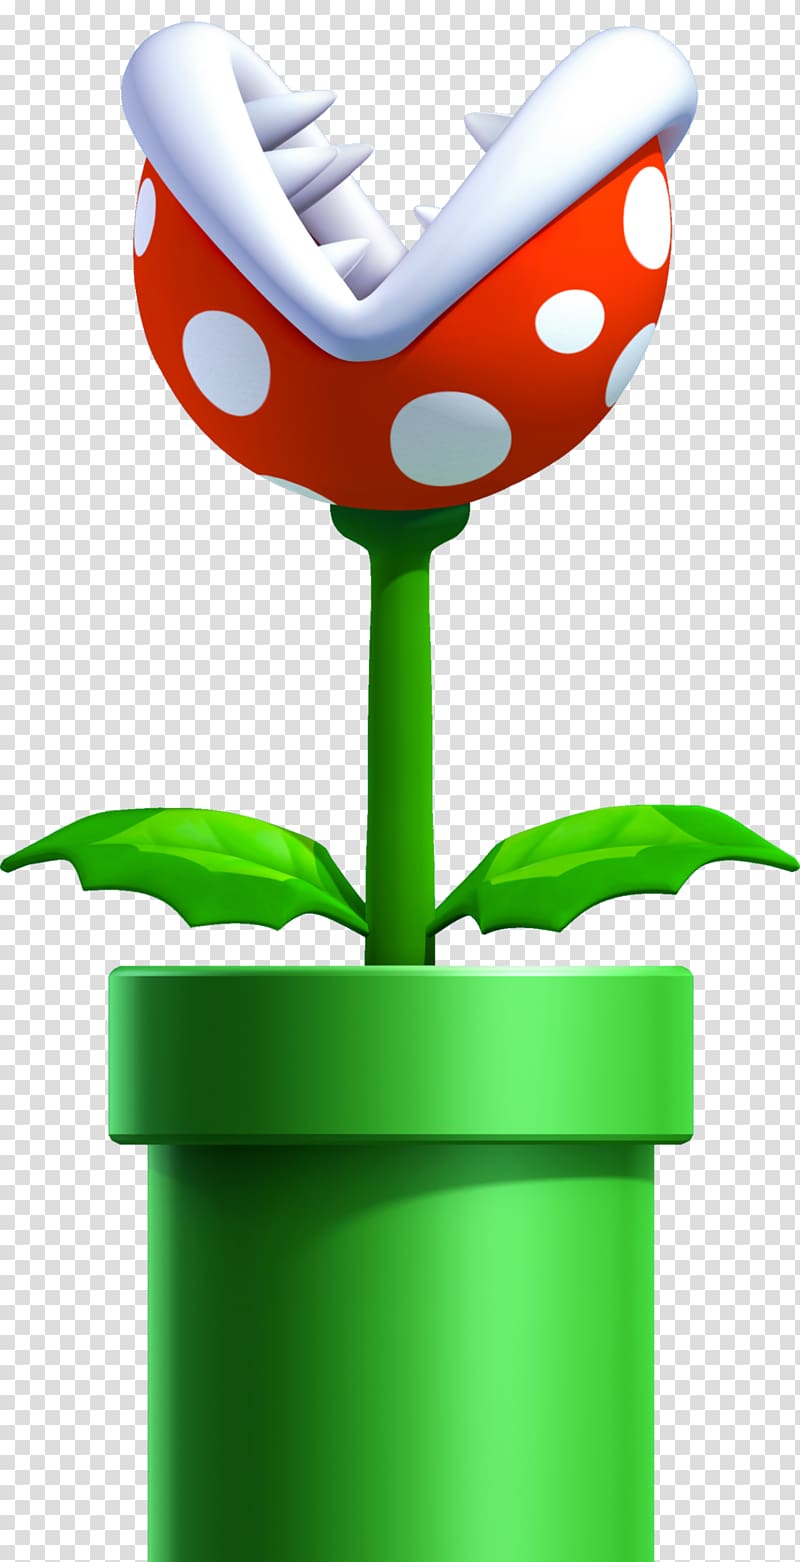 Super Mario plant pot illustration, New Super Mario Bros. U New Super Mario Bros. Wii, super mario bros transparent background PNG clipart